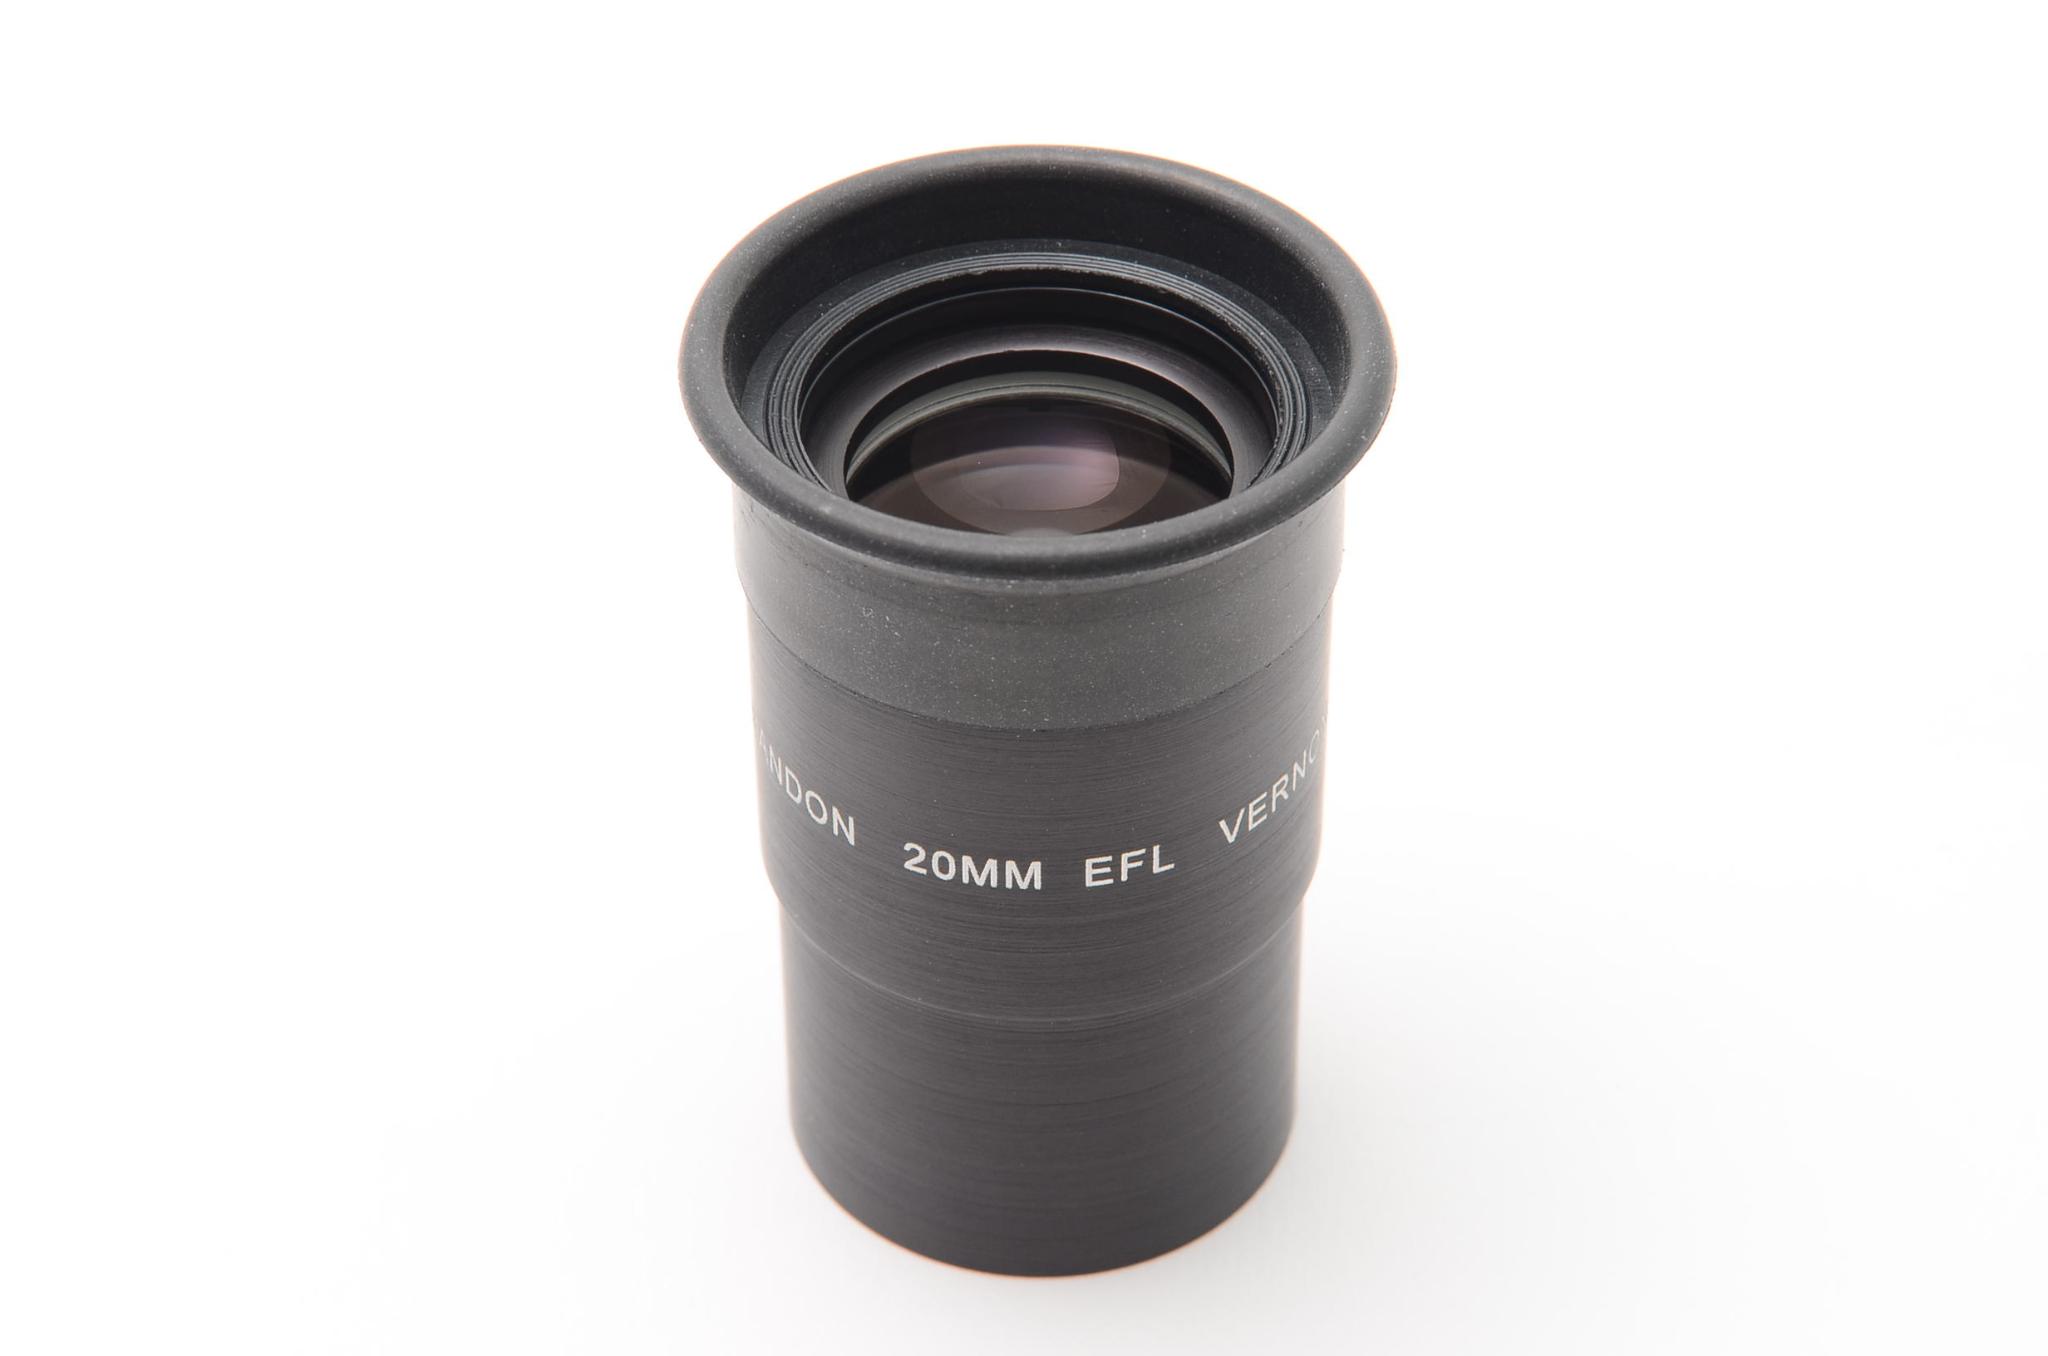 Brandon 20mm eye cup 1.25" telescope eyepiece